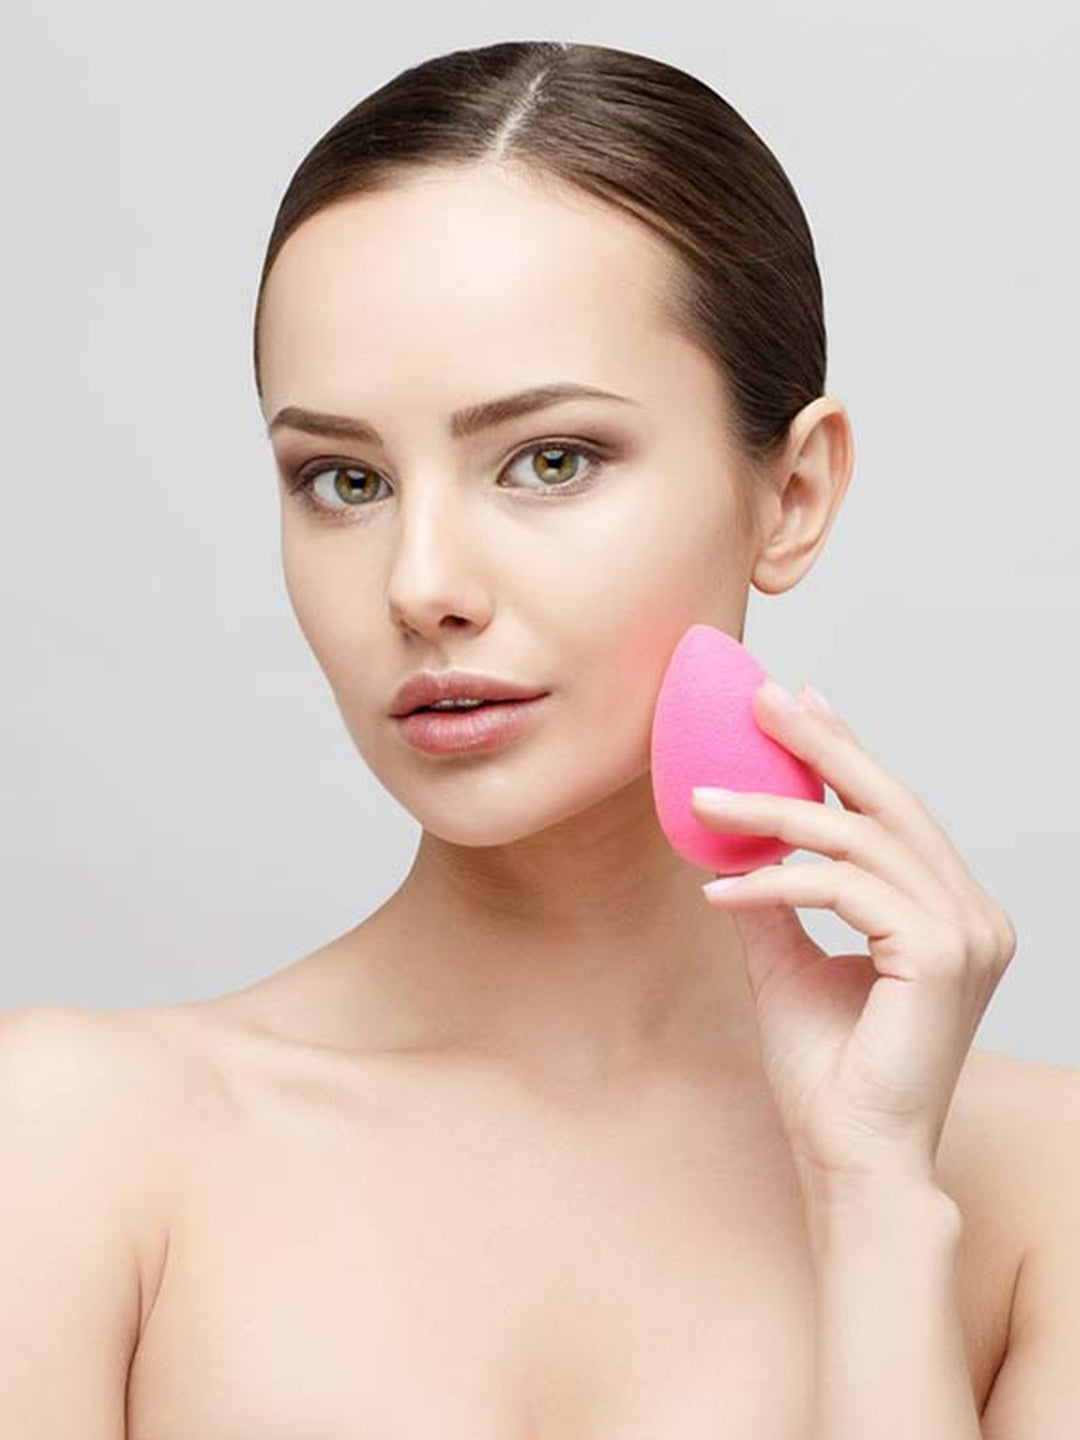 How to use a makeup sponge correctly